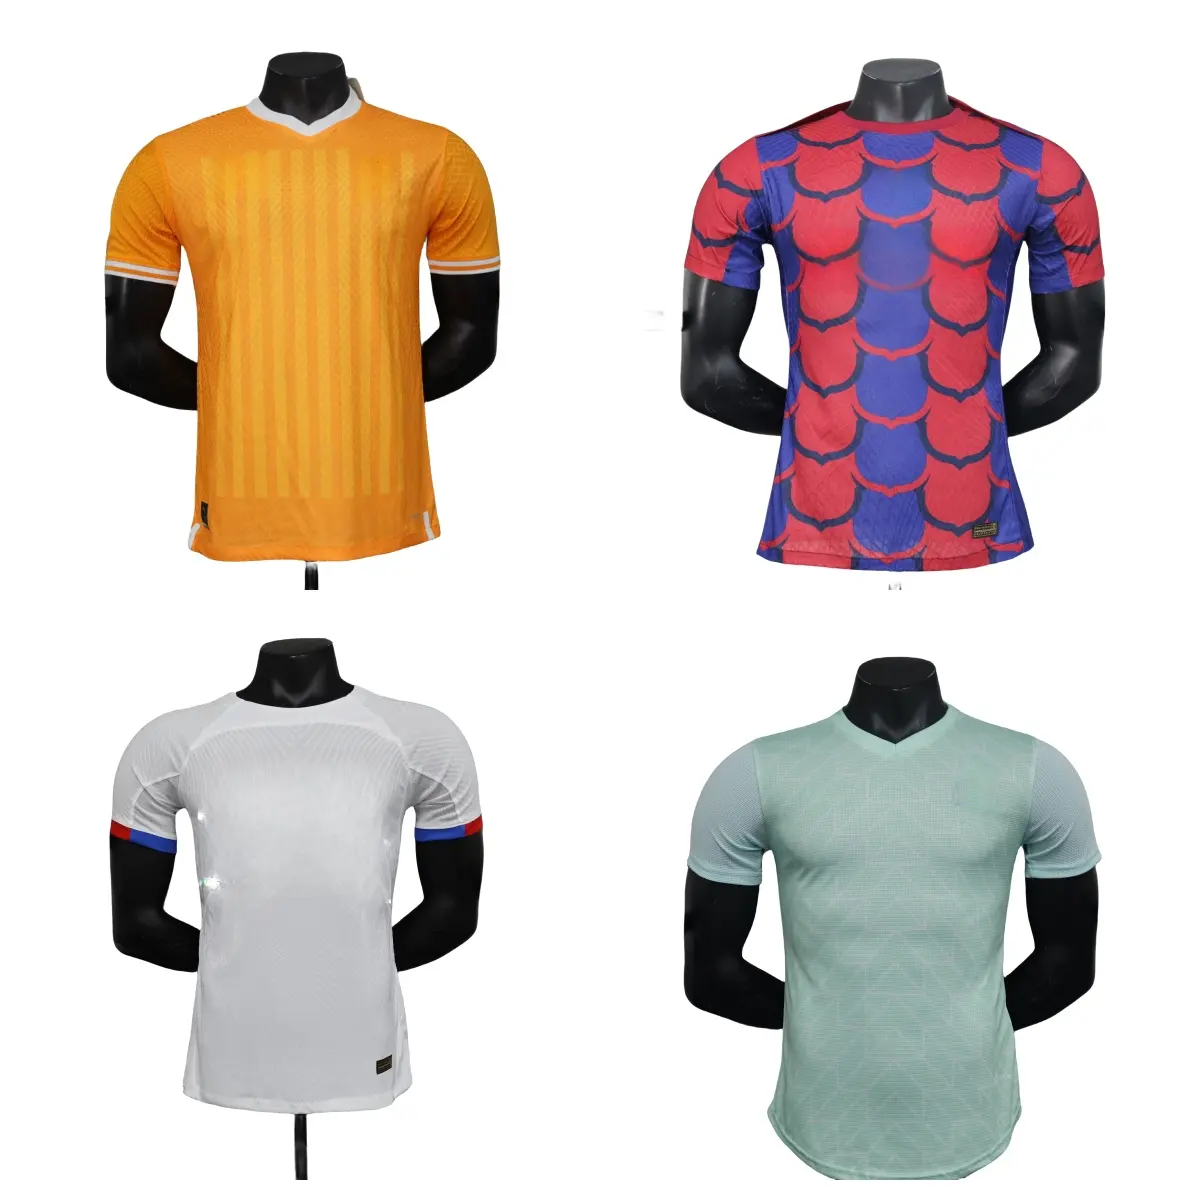 Kaus seragam olahraga sepak bola berkualitas terbaik kaus latihan seragam tim Aljazair A. Mandea